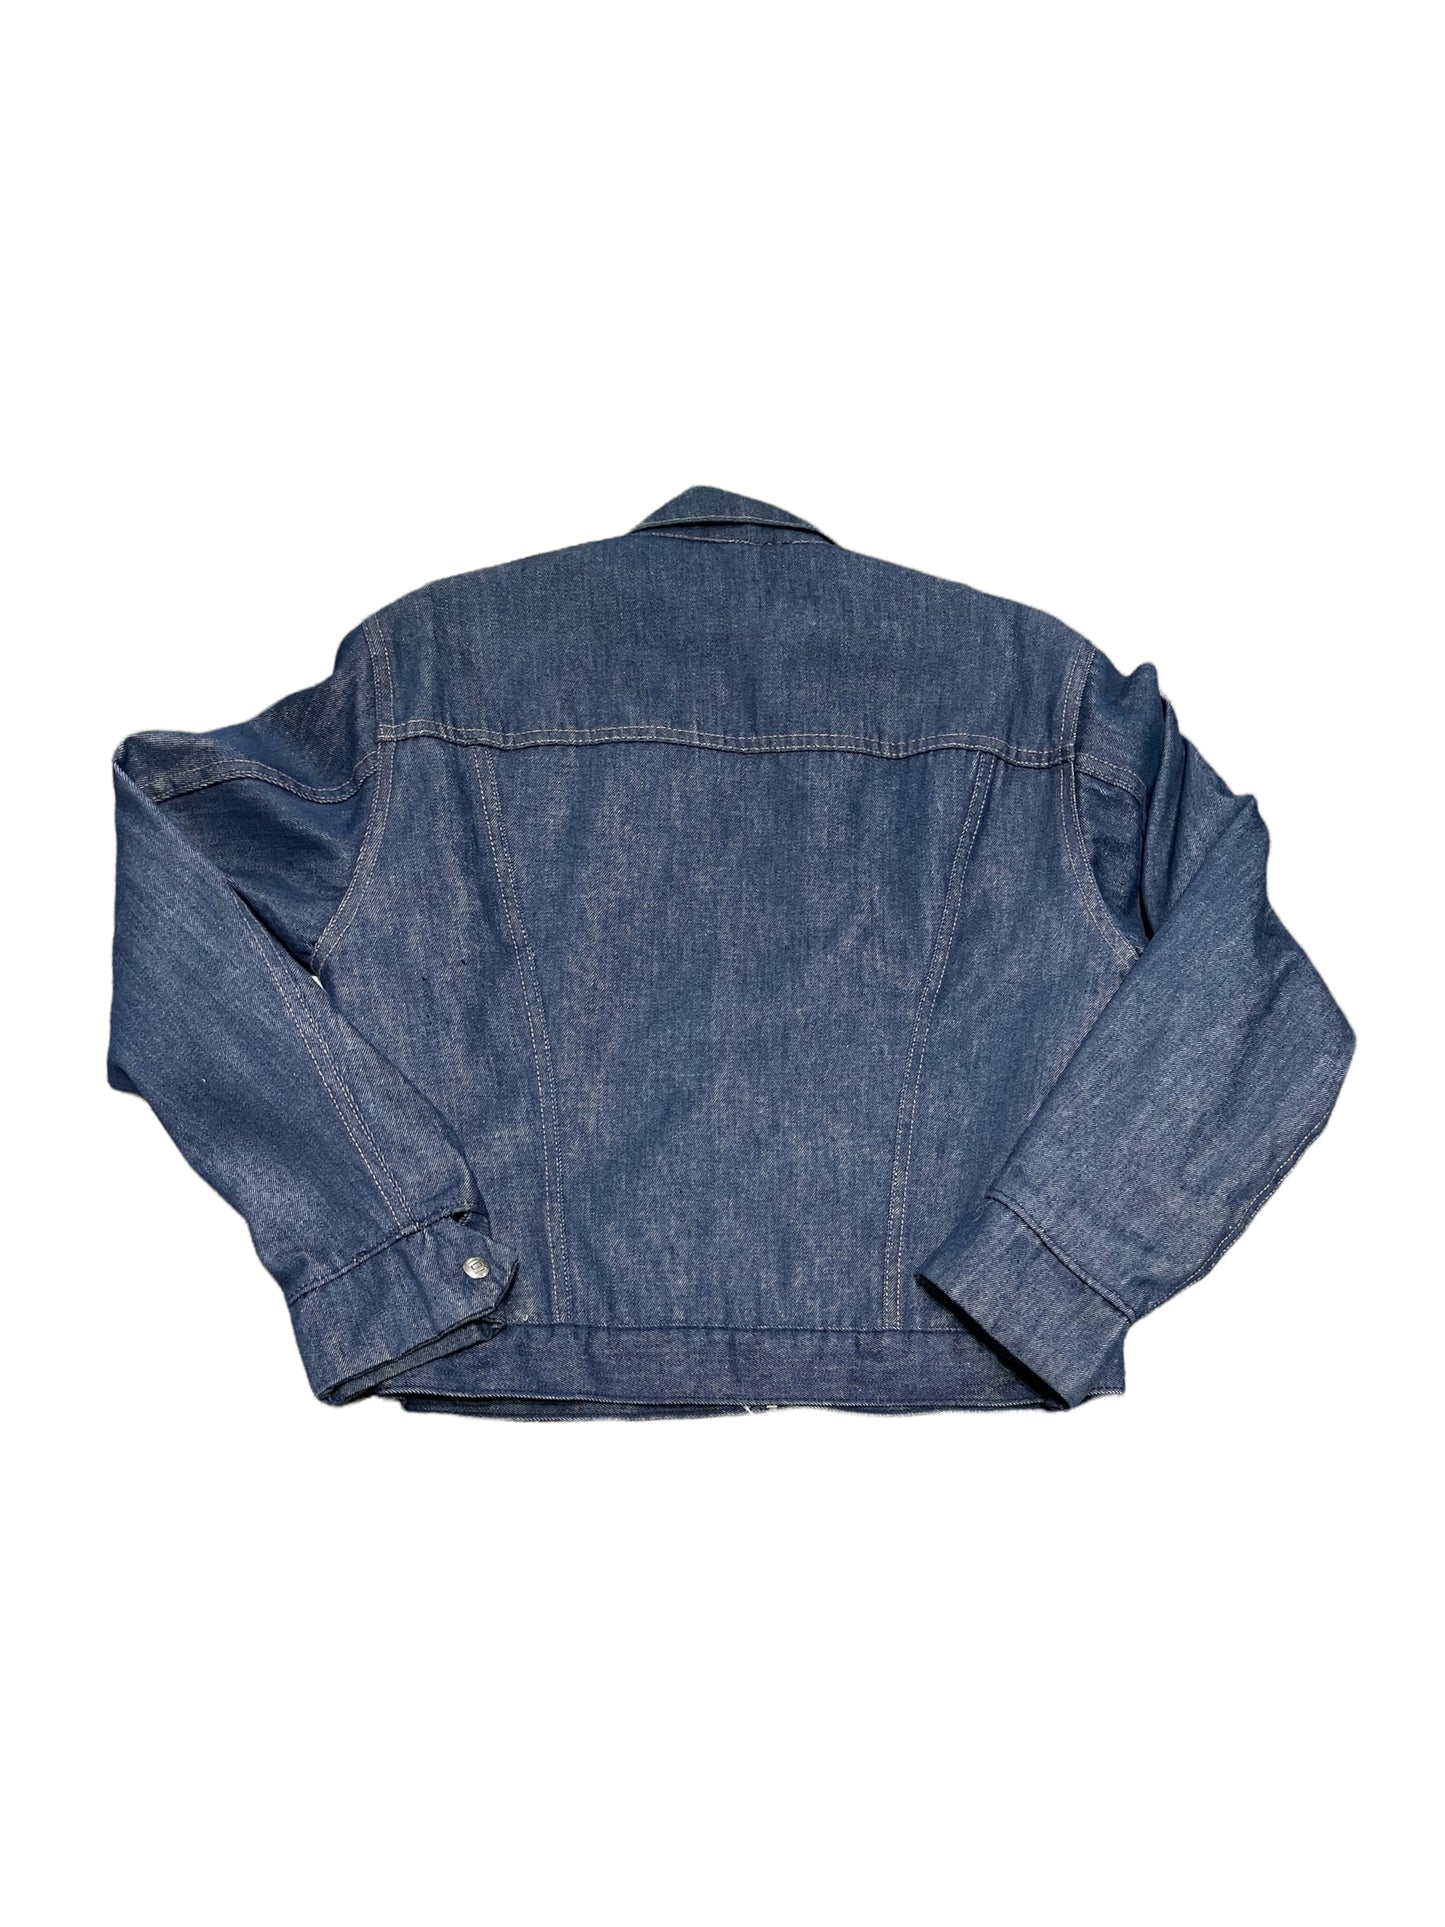 Vintage 70s Montgomery Ward Fleece Lined Denim Jacket Medium